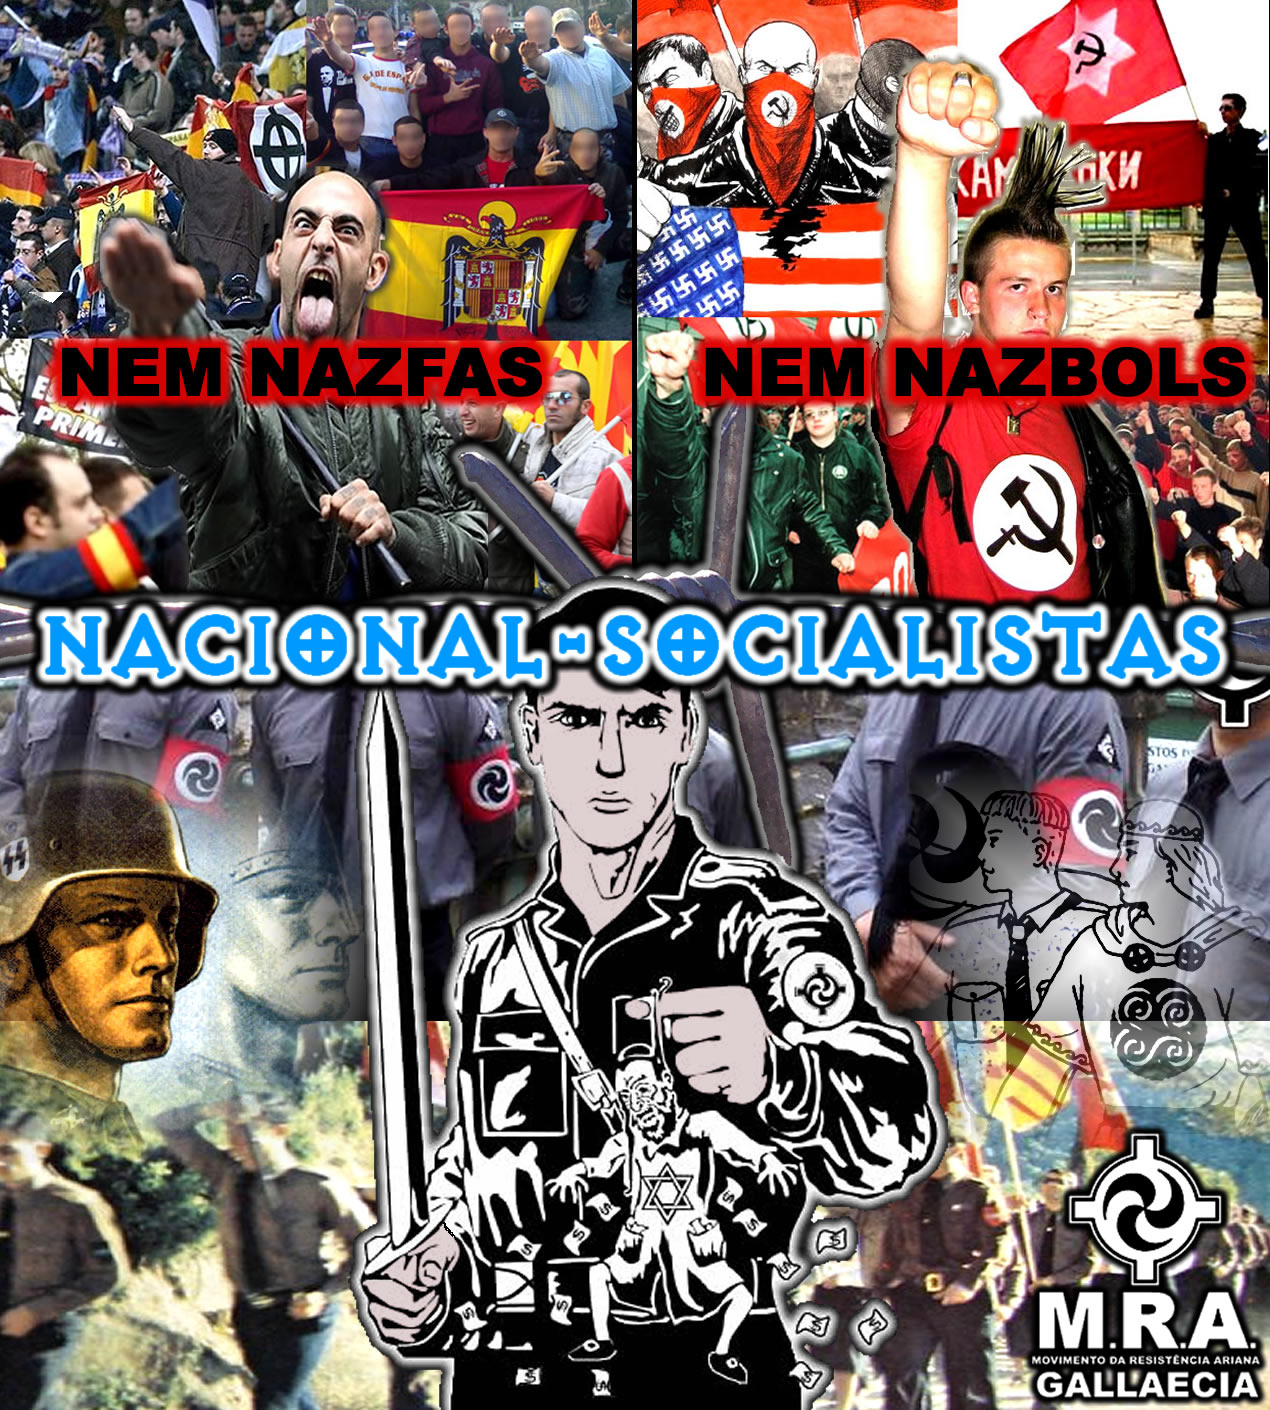 Fascismos VS. Nacionalsocialismo